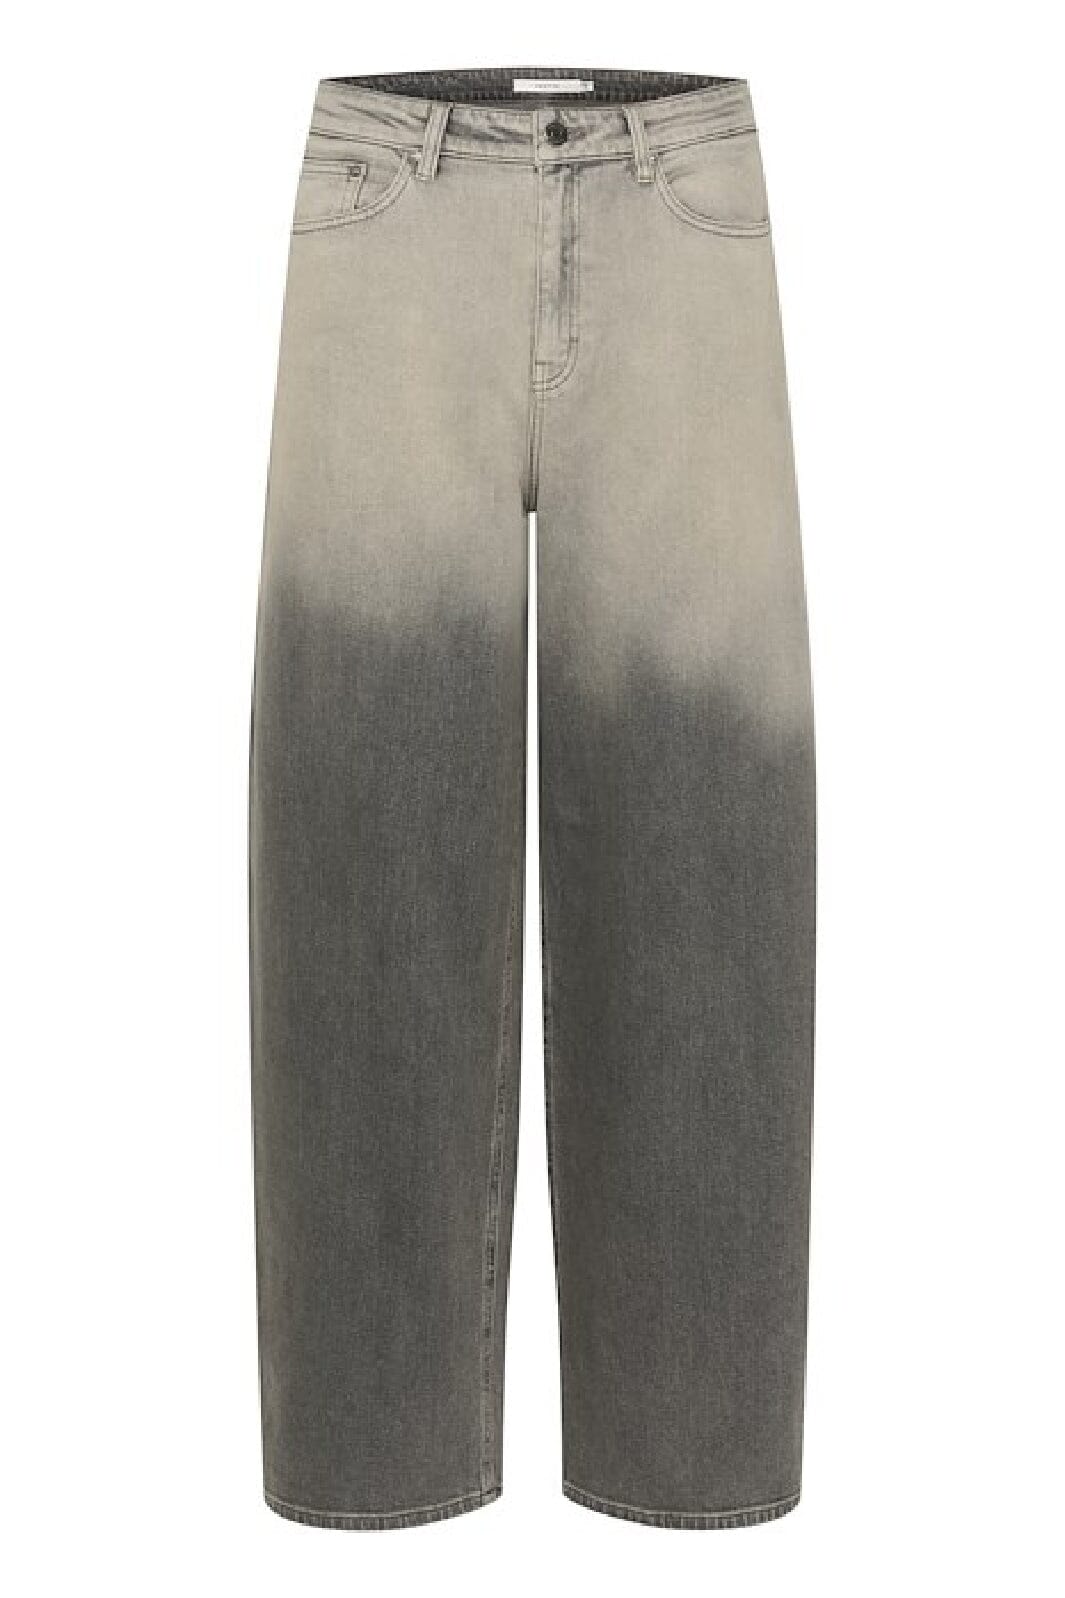 Gestuz - Zorellygz Wide Pants - 106055 Grey Faided Wash Jeans 